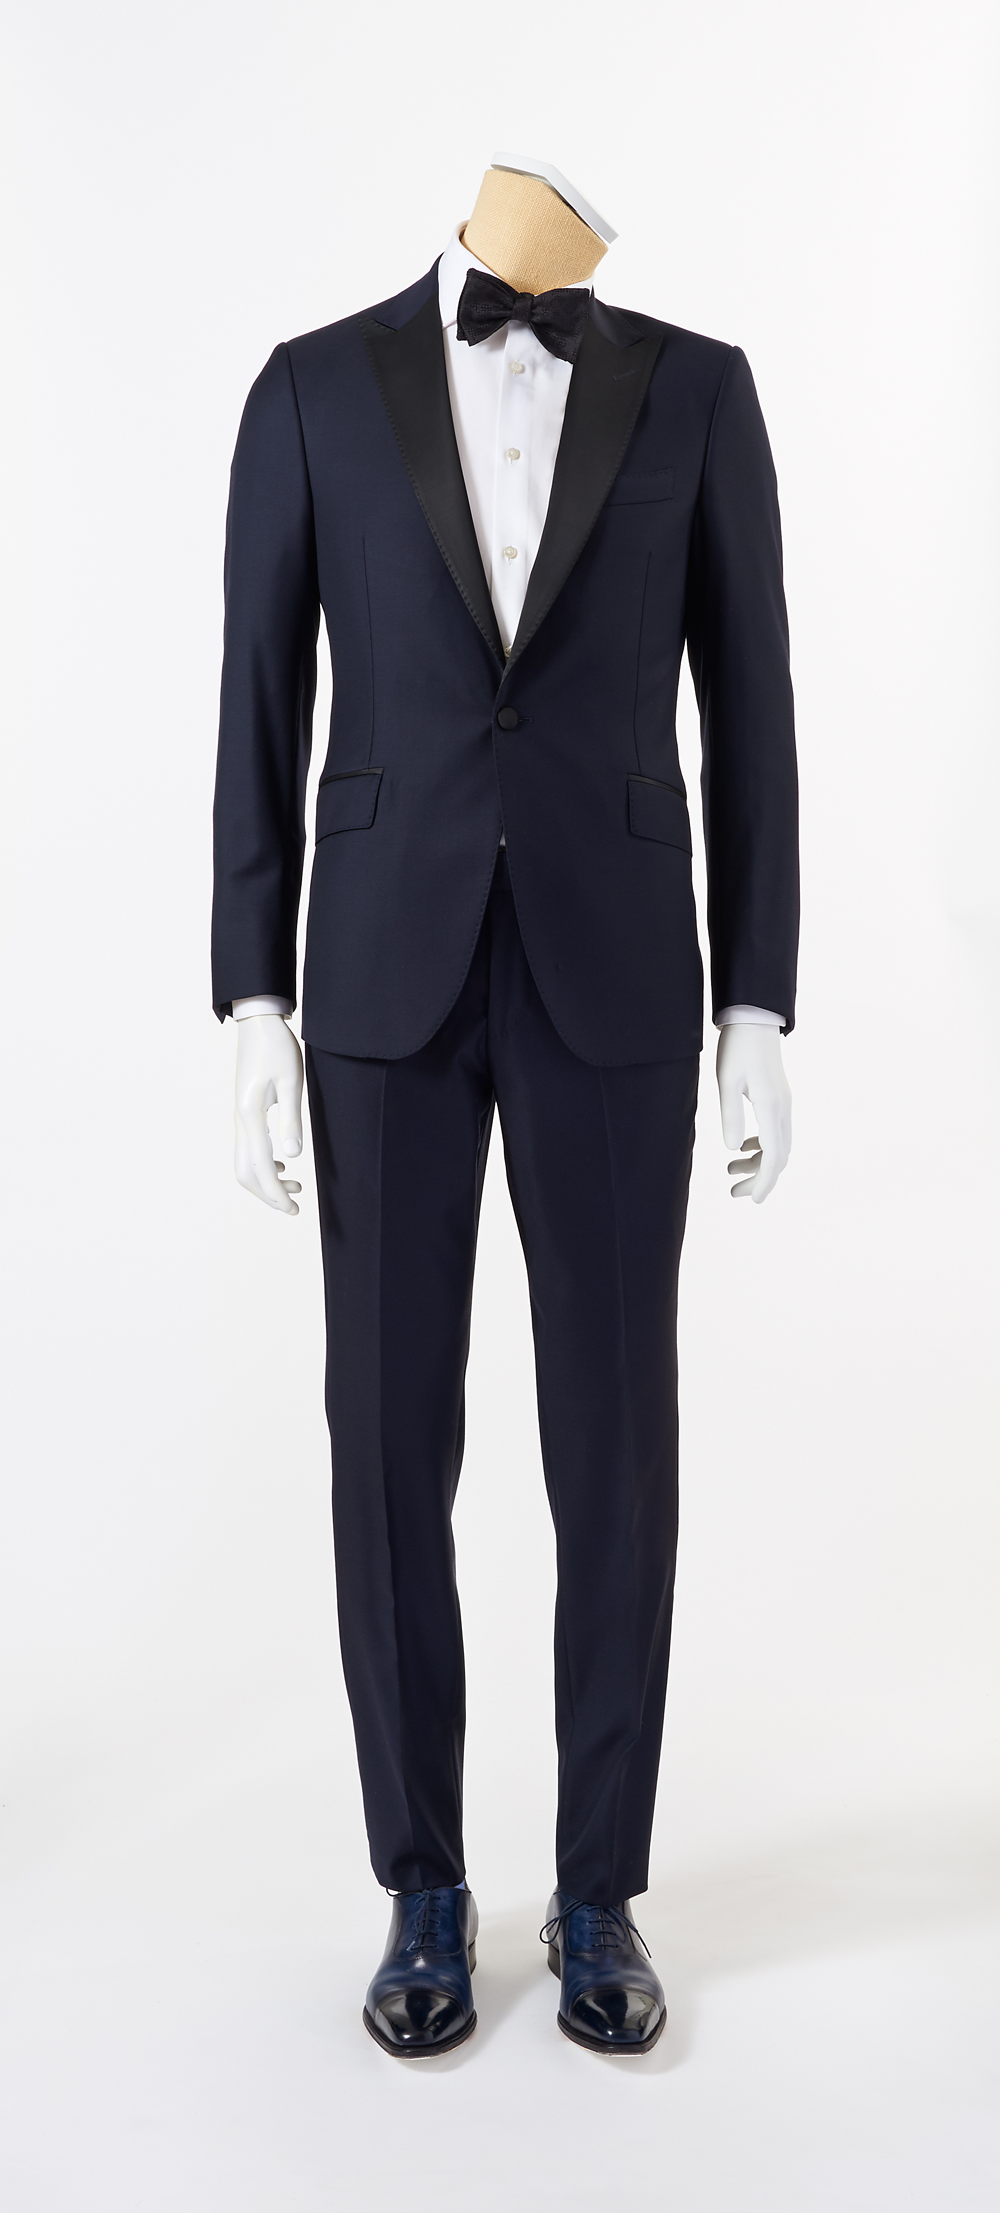 Calvaresi Suit - Navy Tuxedo with Black Trim